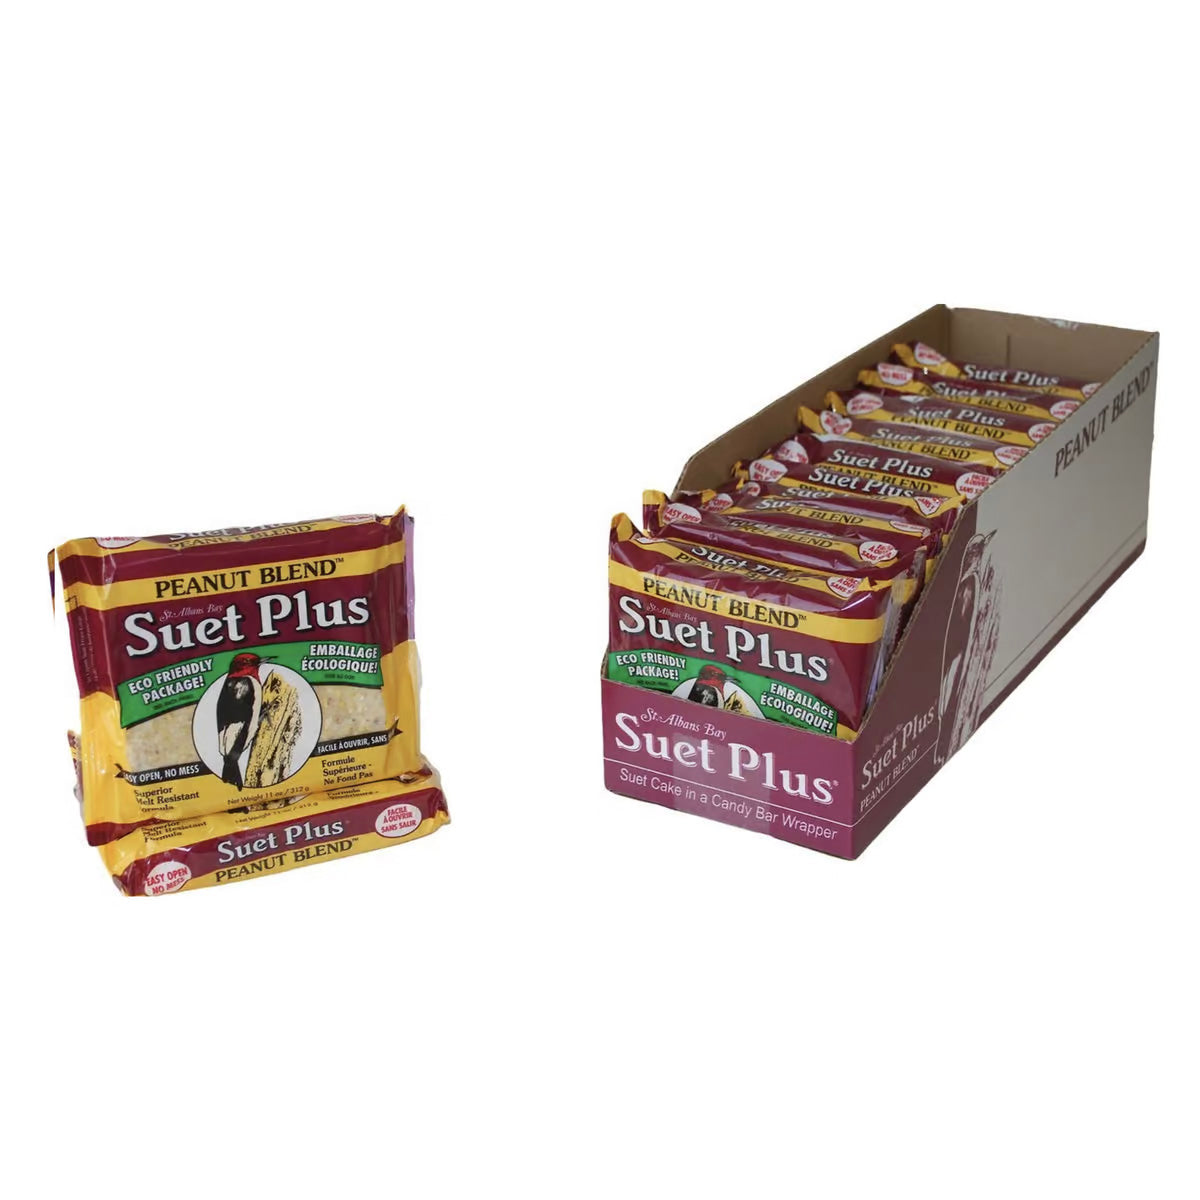 St. Albans Bay Suet Plus Peanut Blend Suet Wild Bird Food - Case of 12 Cakes